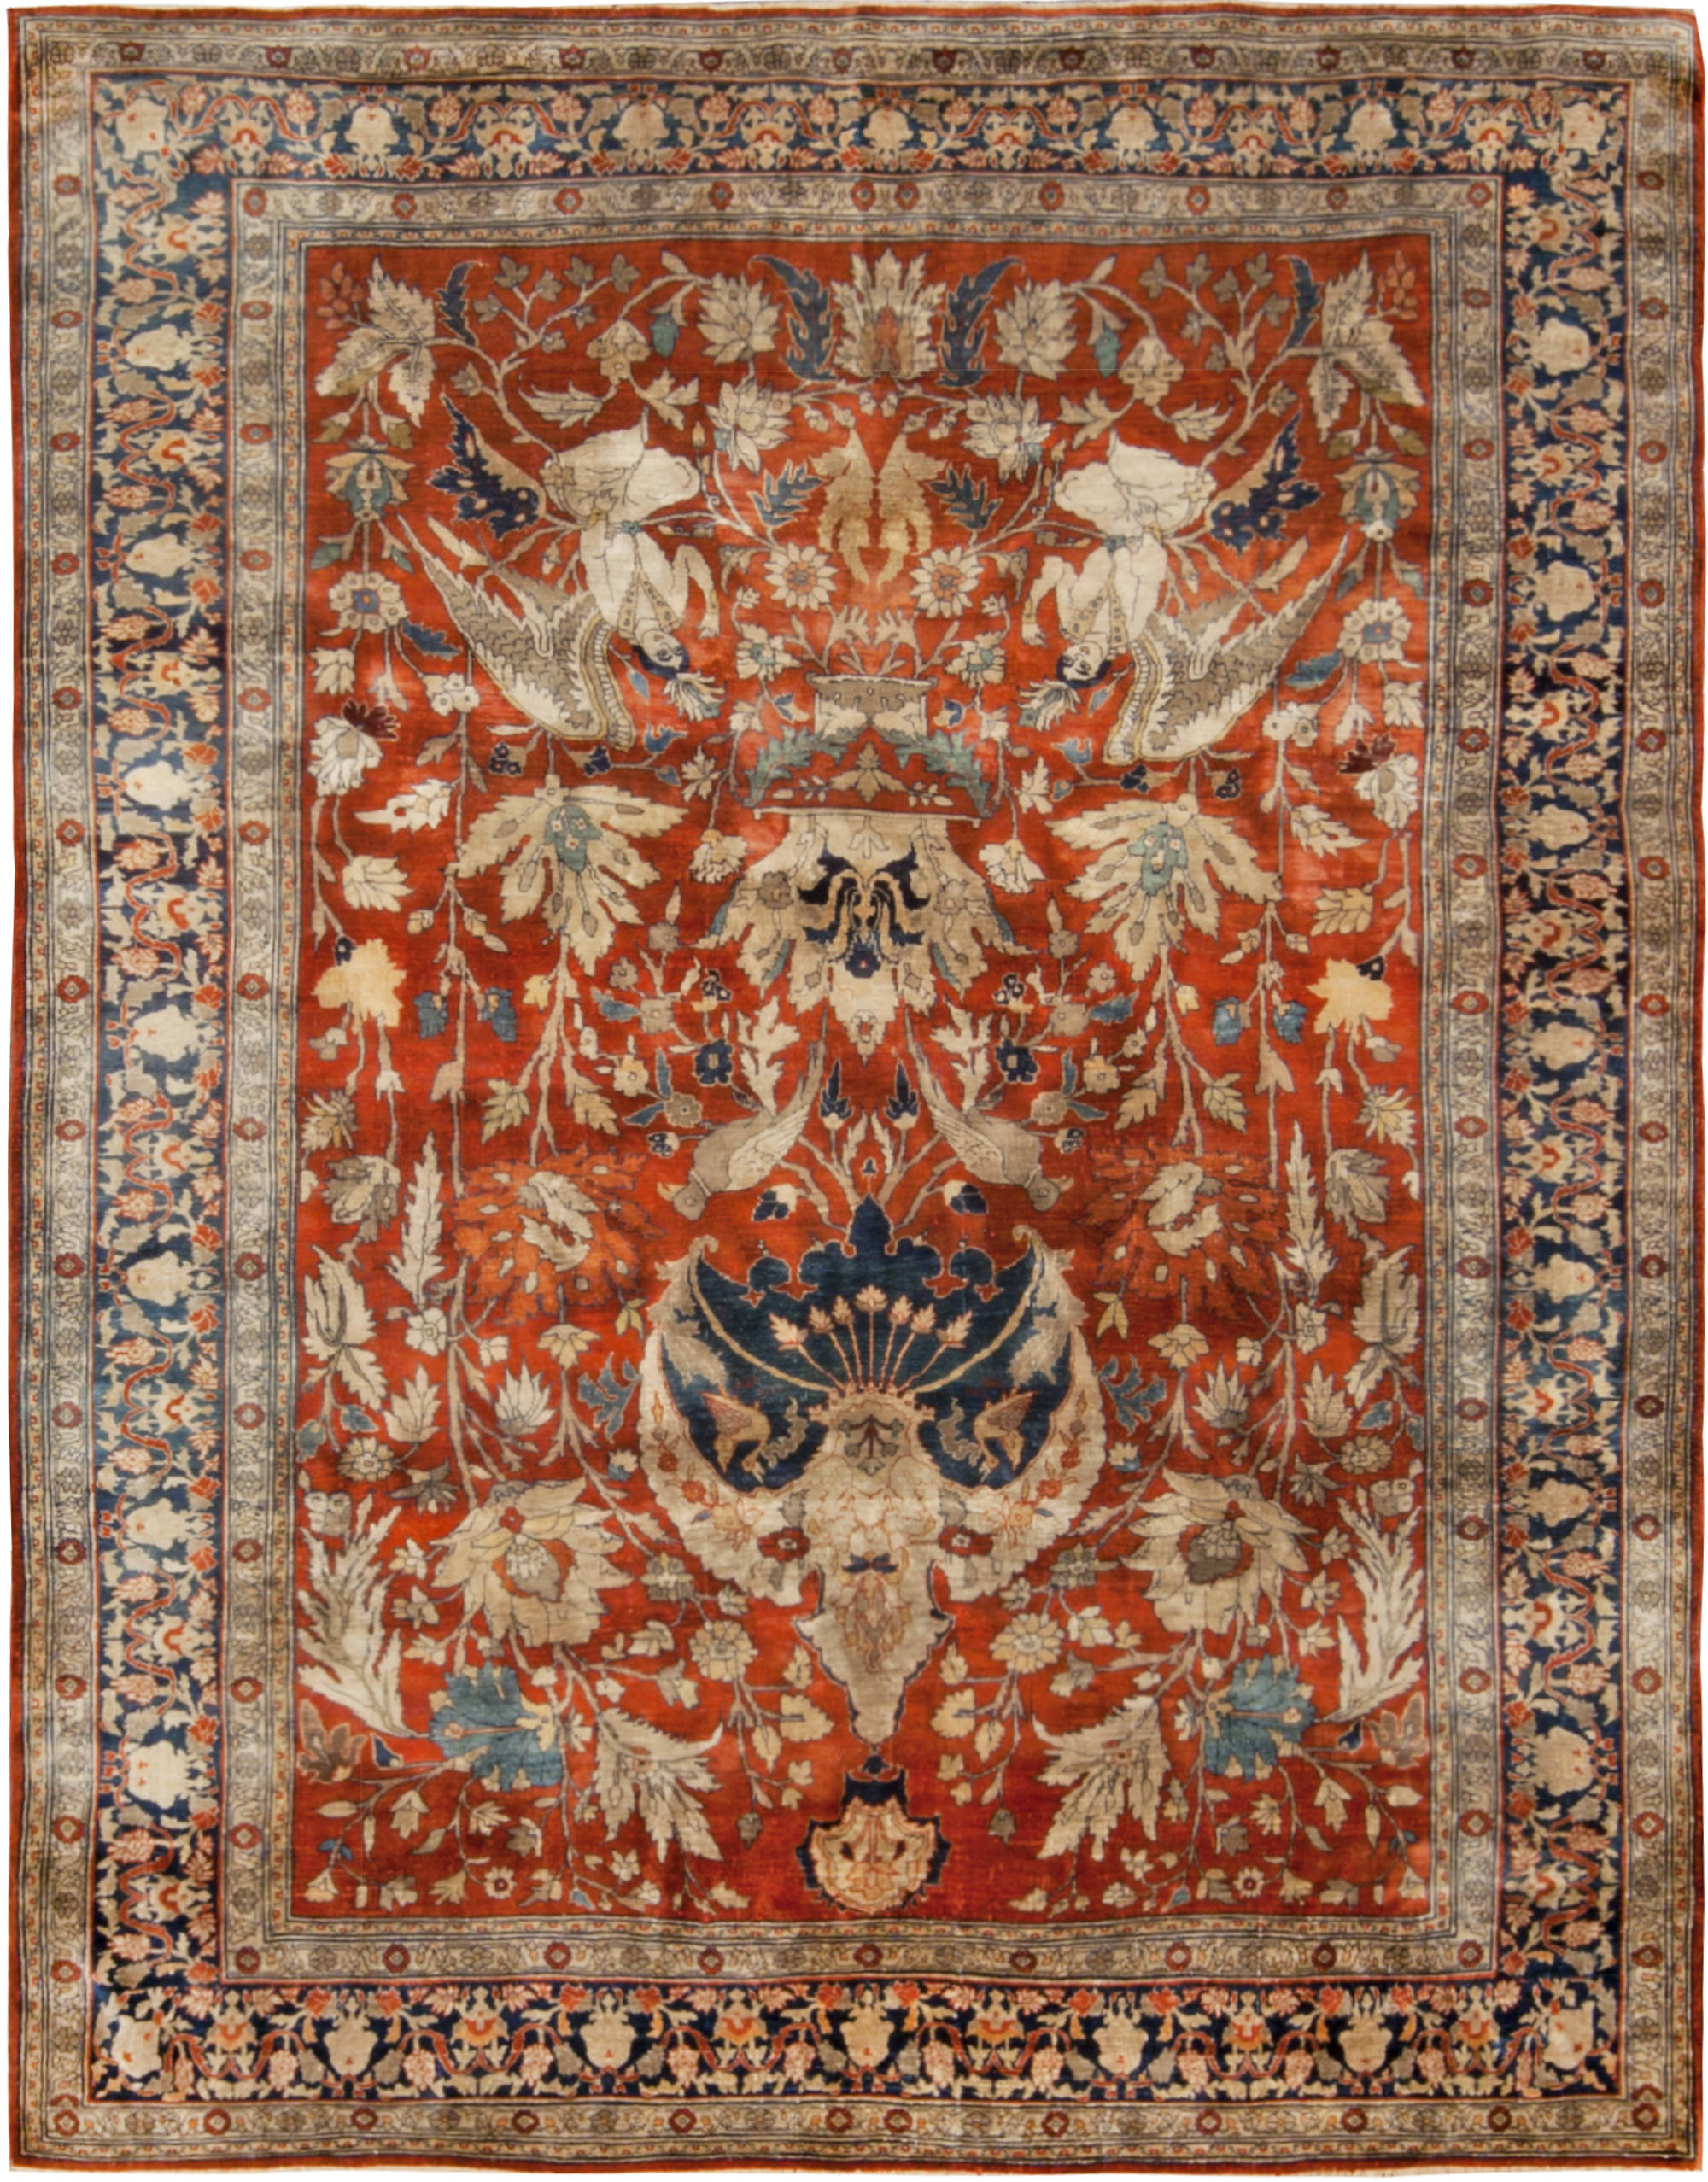 19th Century Persian Tabriz Silk Red and Navy Blue Rug